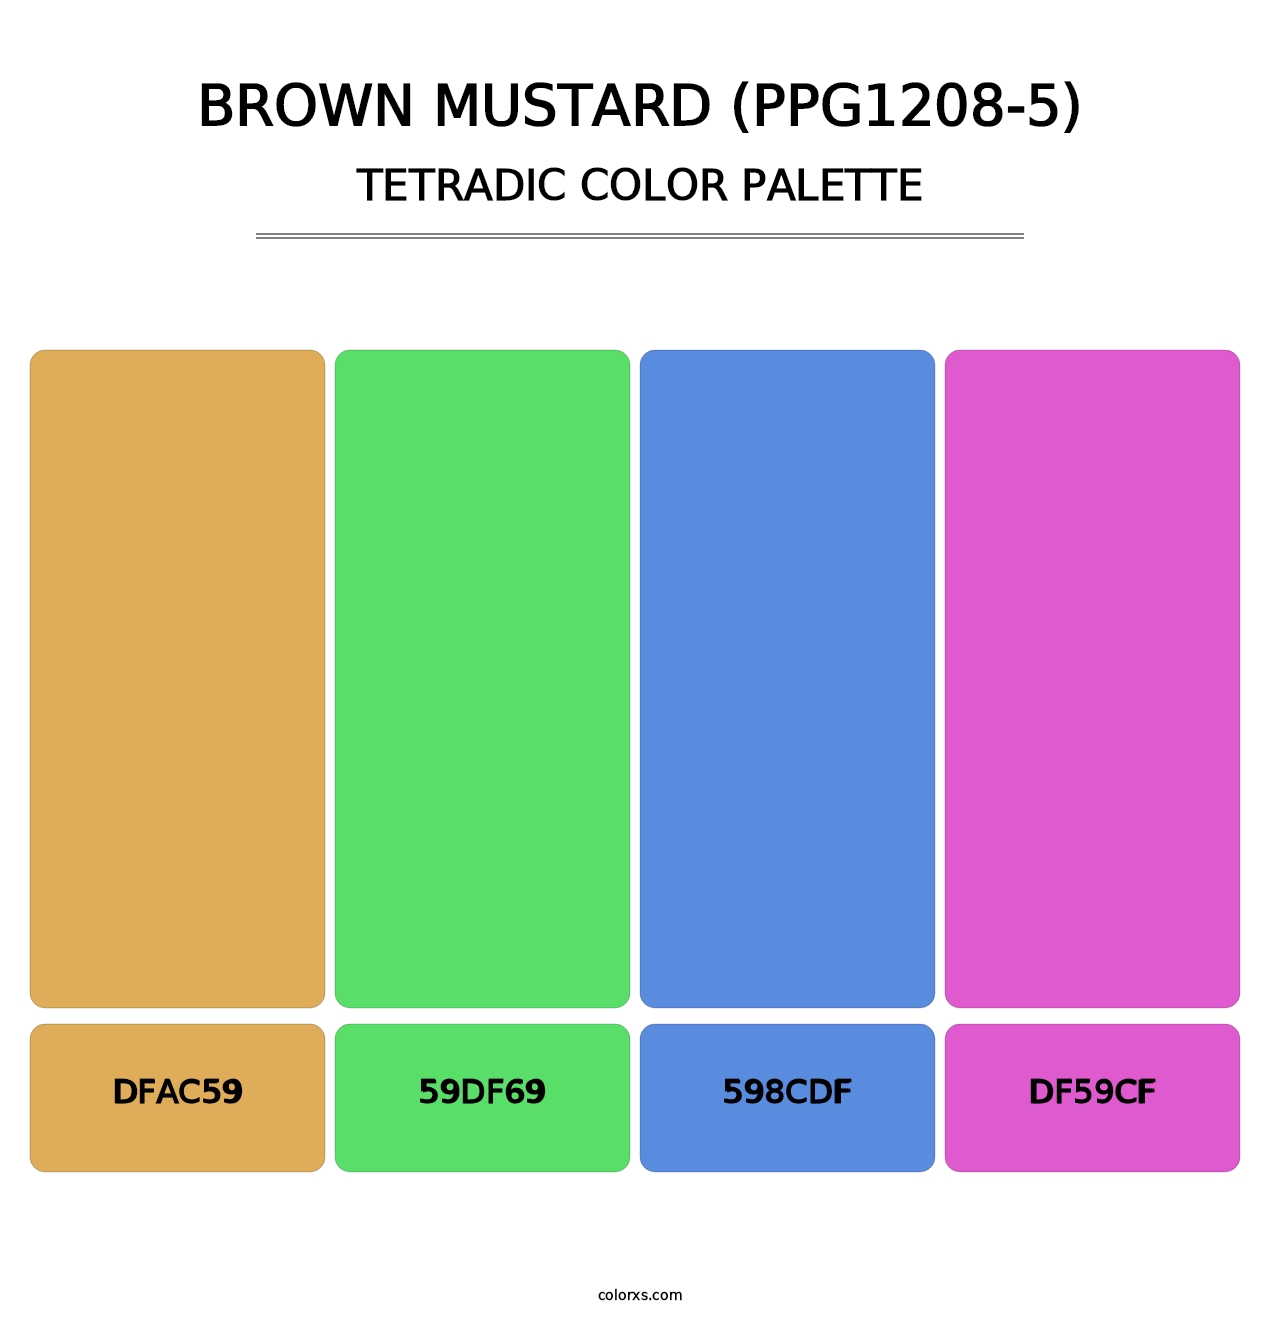 Brown Mustard (PPG1208-5) - Tetradic Color Palette